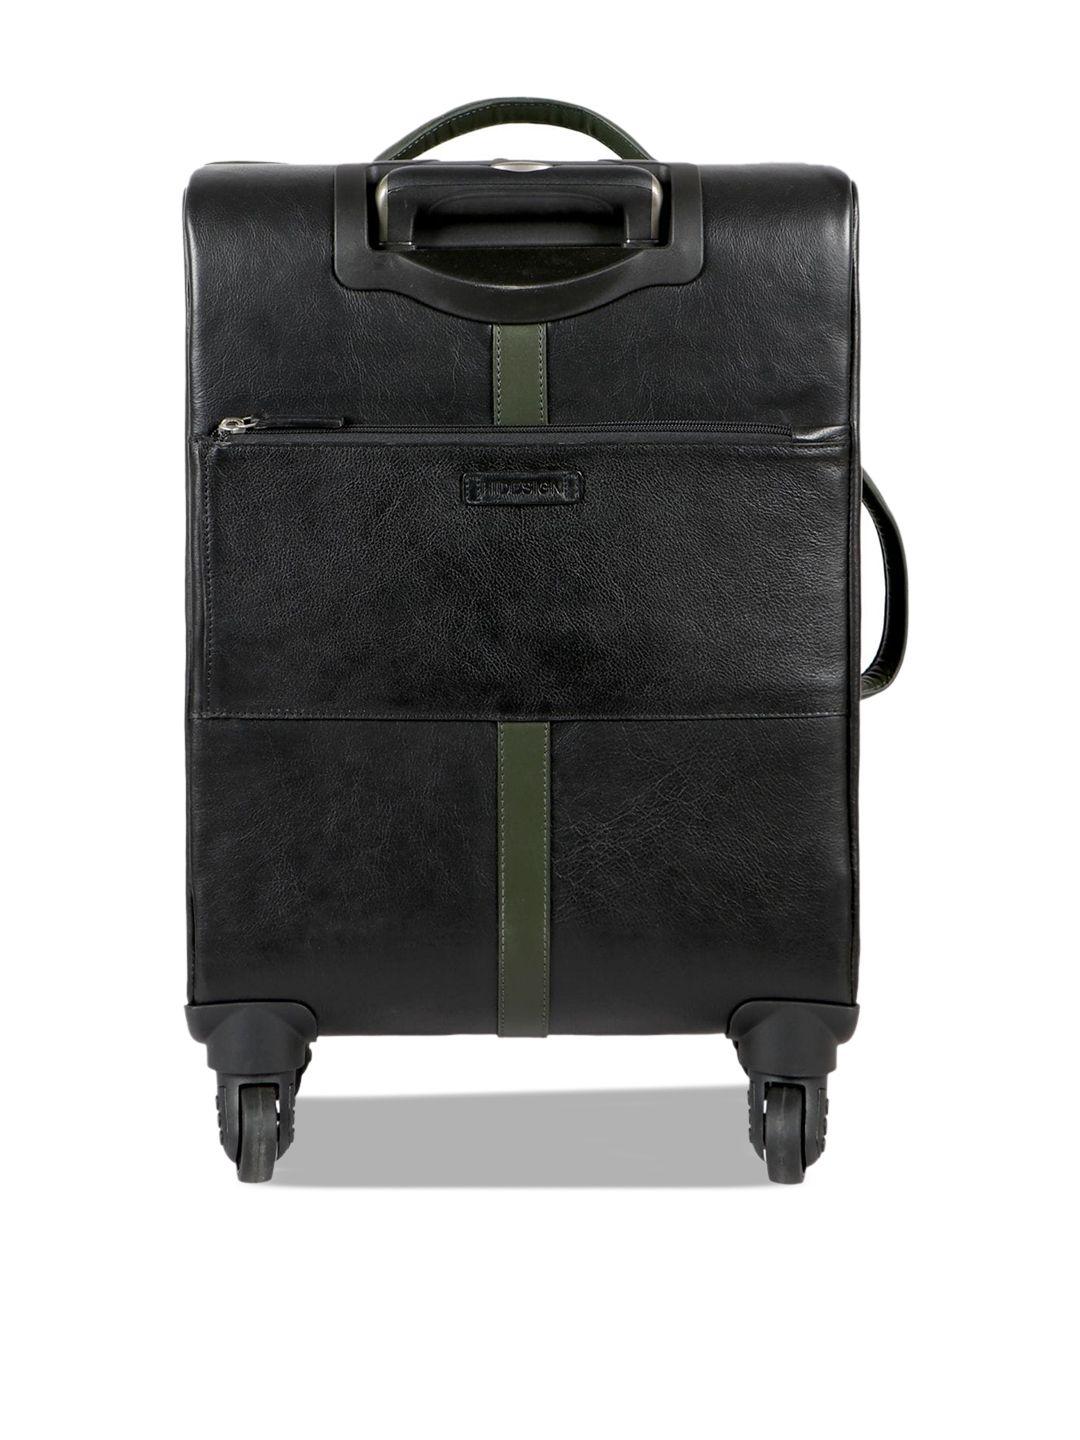 hidesign black solid medium leather trolley suitcase